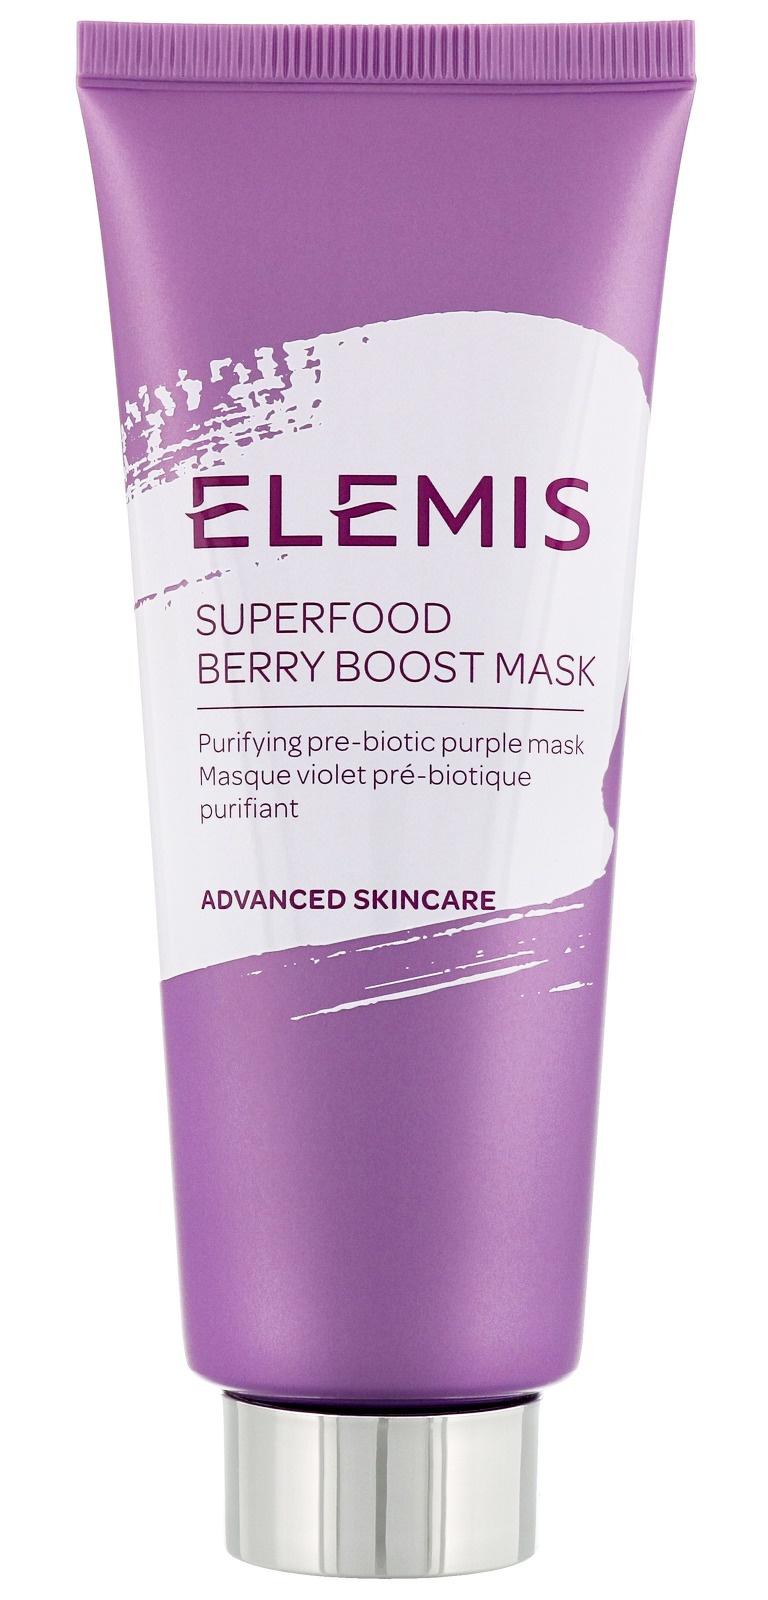 Elemis Superfood Berry Boost Mask